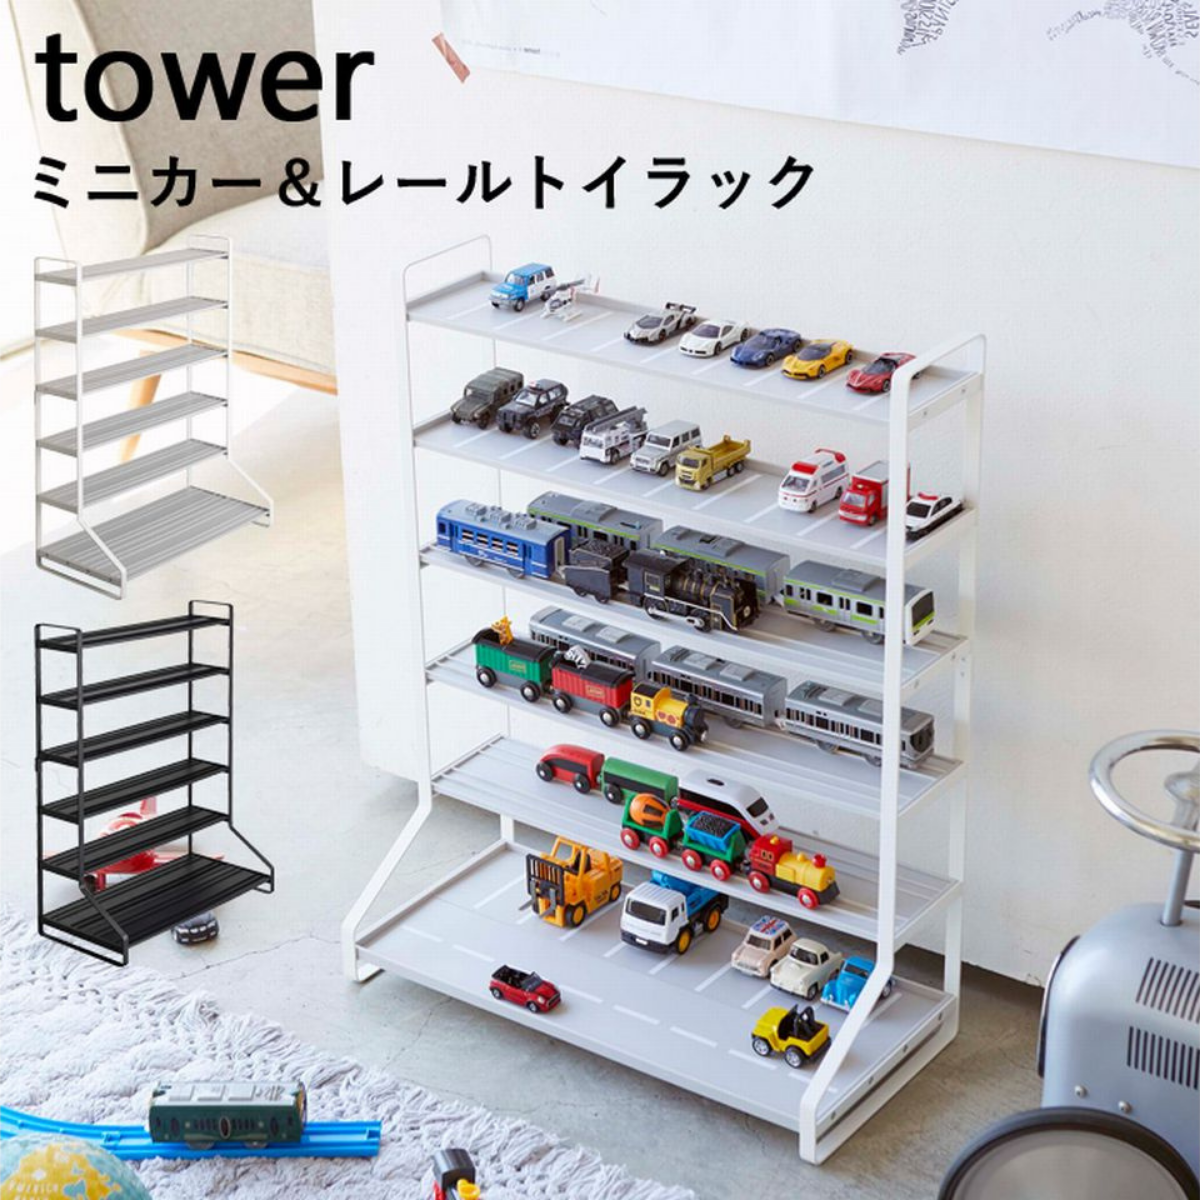 tower】ミニカ―&レールトイラック ホワイト ブラック 山崎実業5018/5019